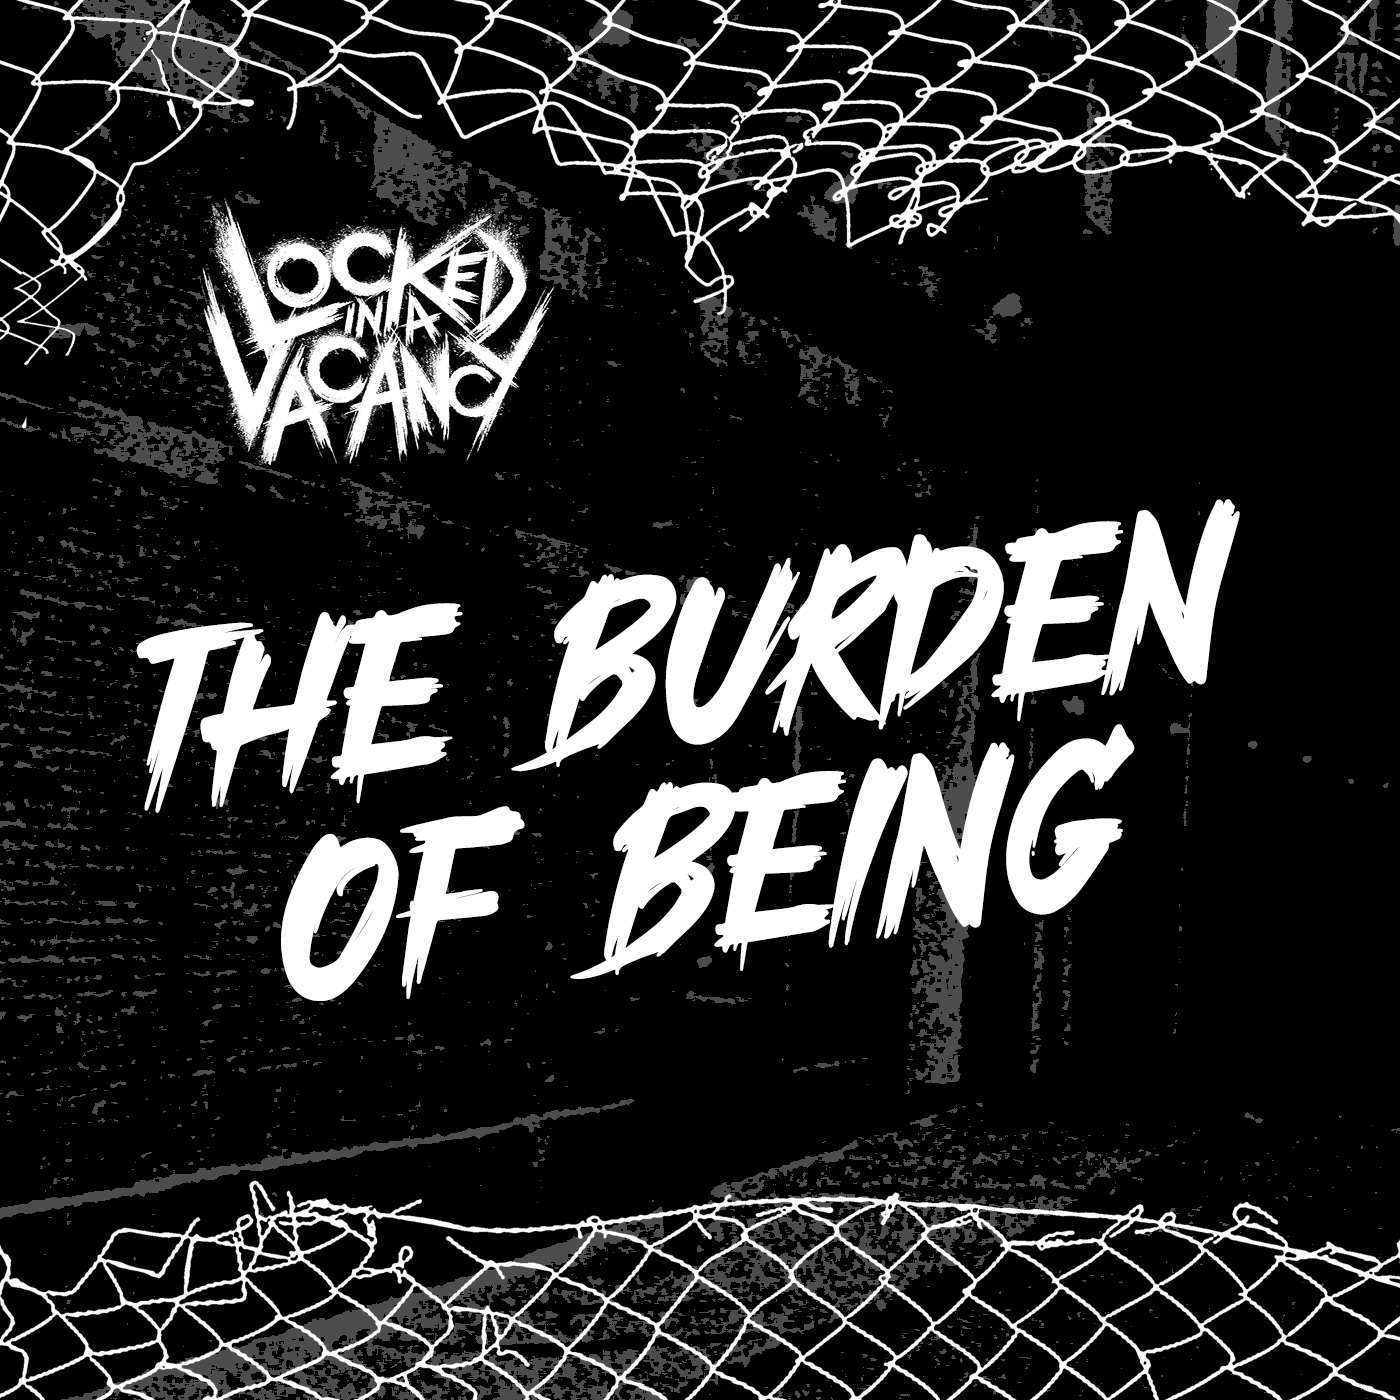 Locked In A Vacancy "The Burden of Being" single artwork